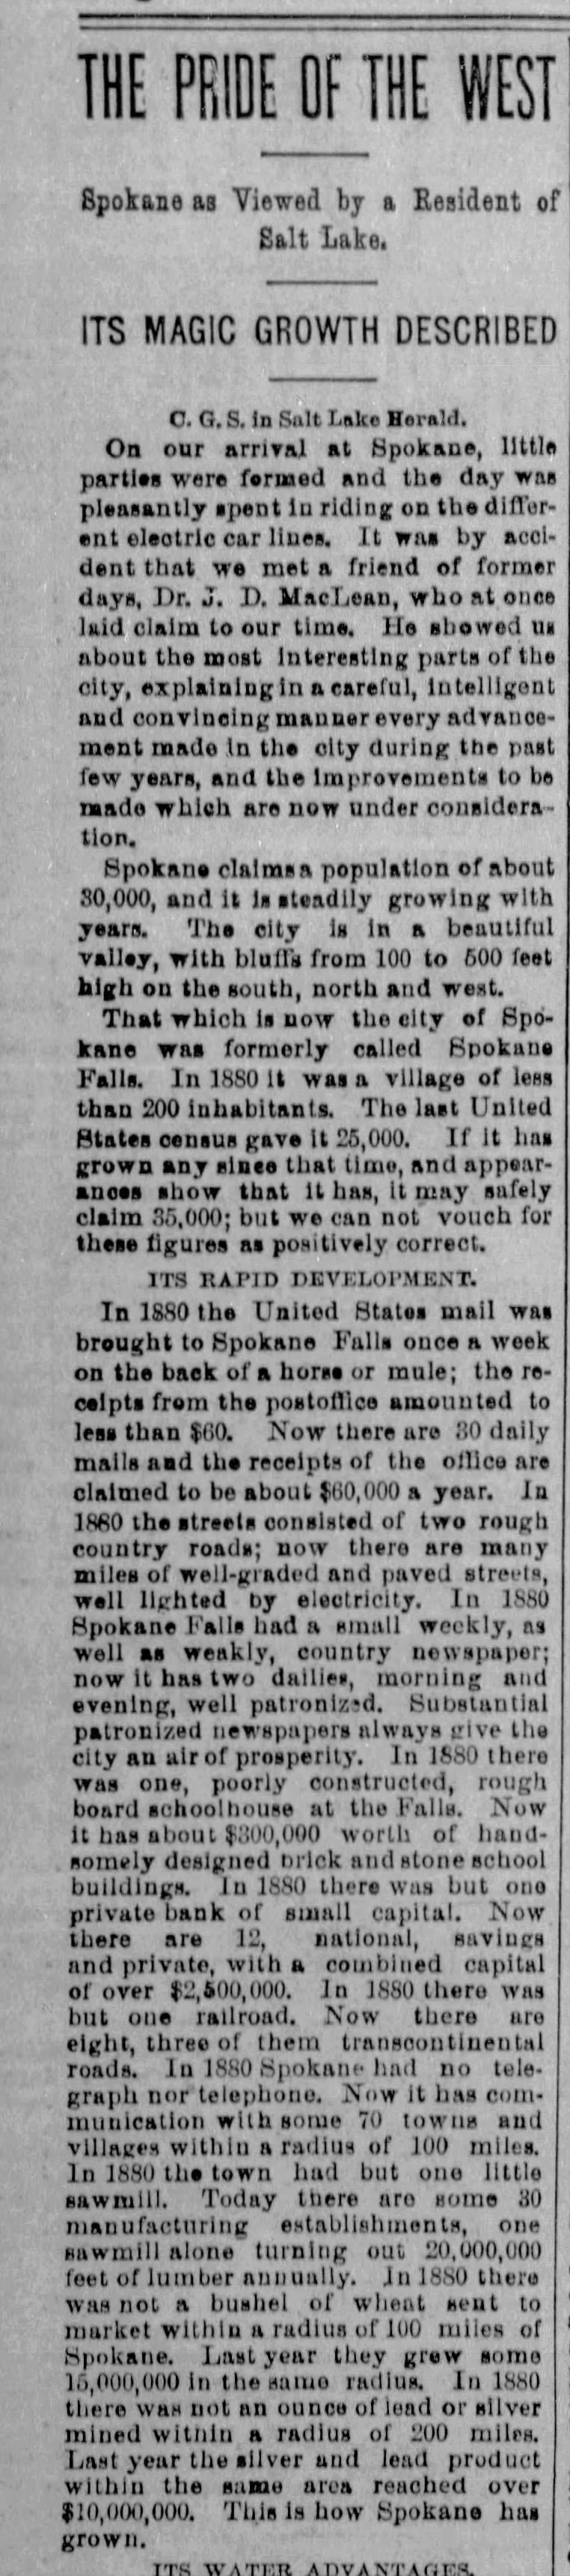 The Growth of Spokane Falls 1880-1893